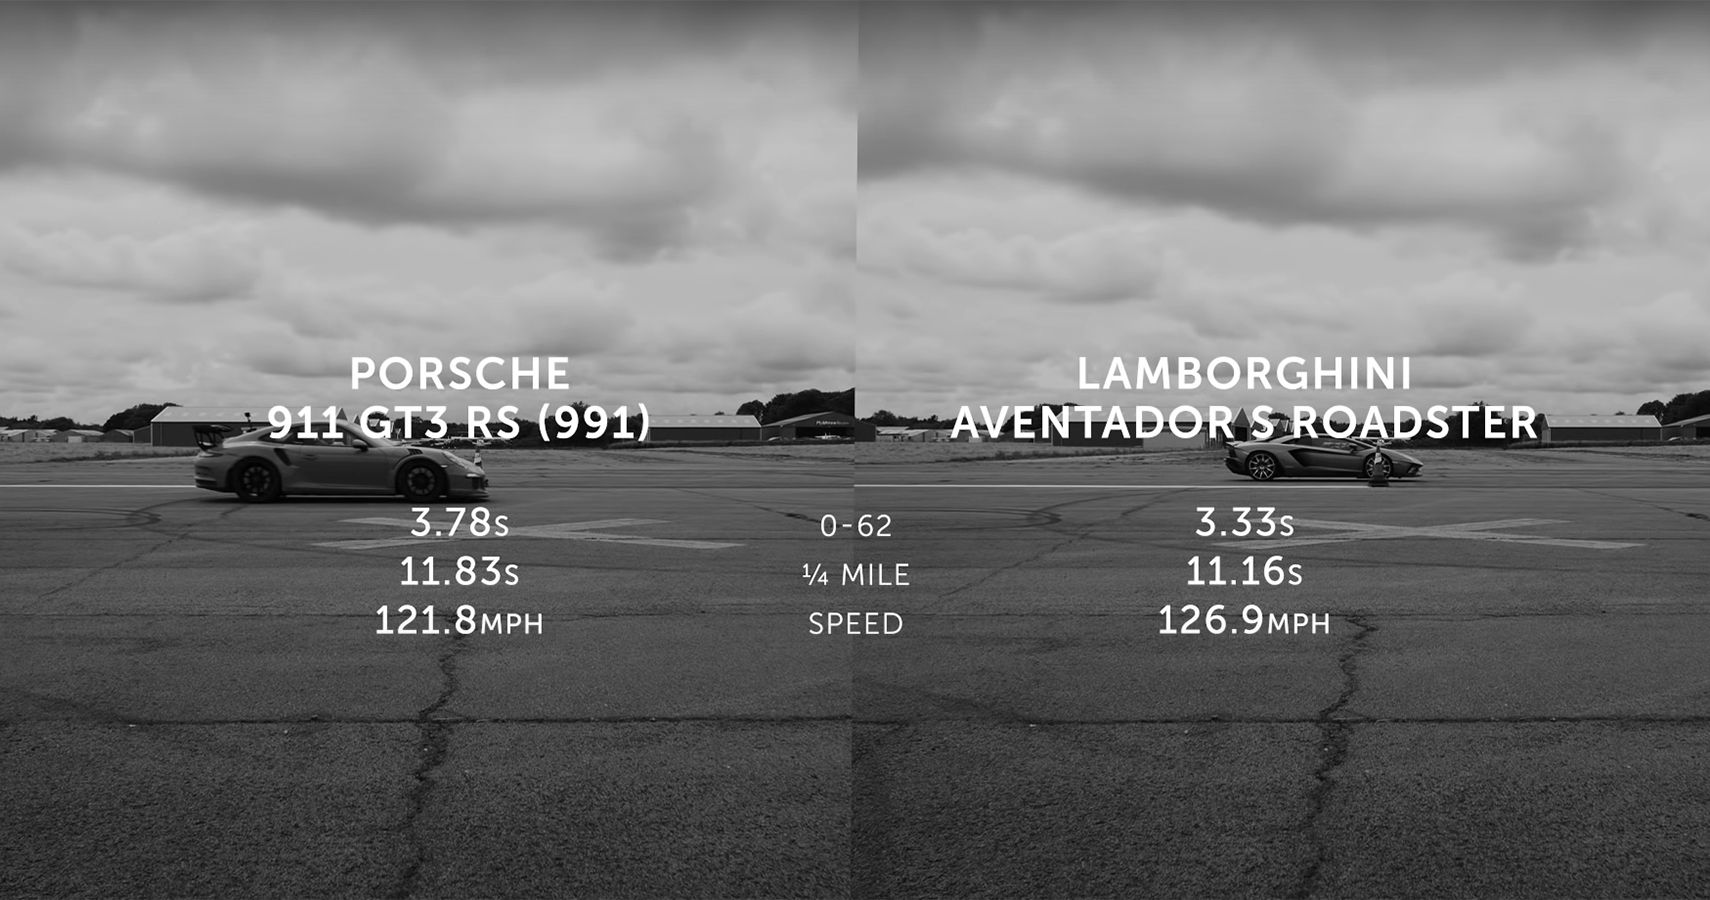 Lamborghini Aventador S Roadster vs Porsche 911 GT3 RS race numbers